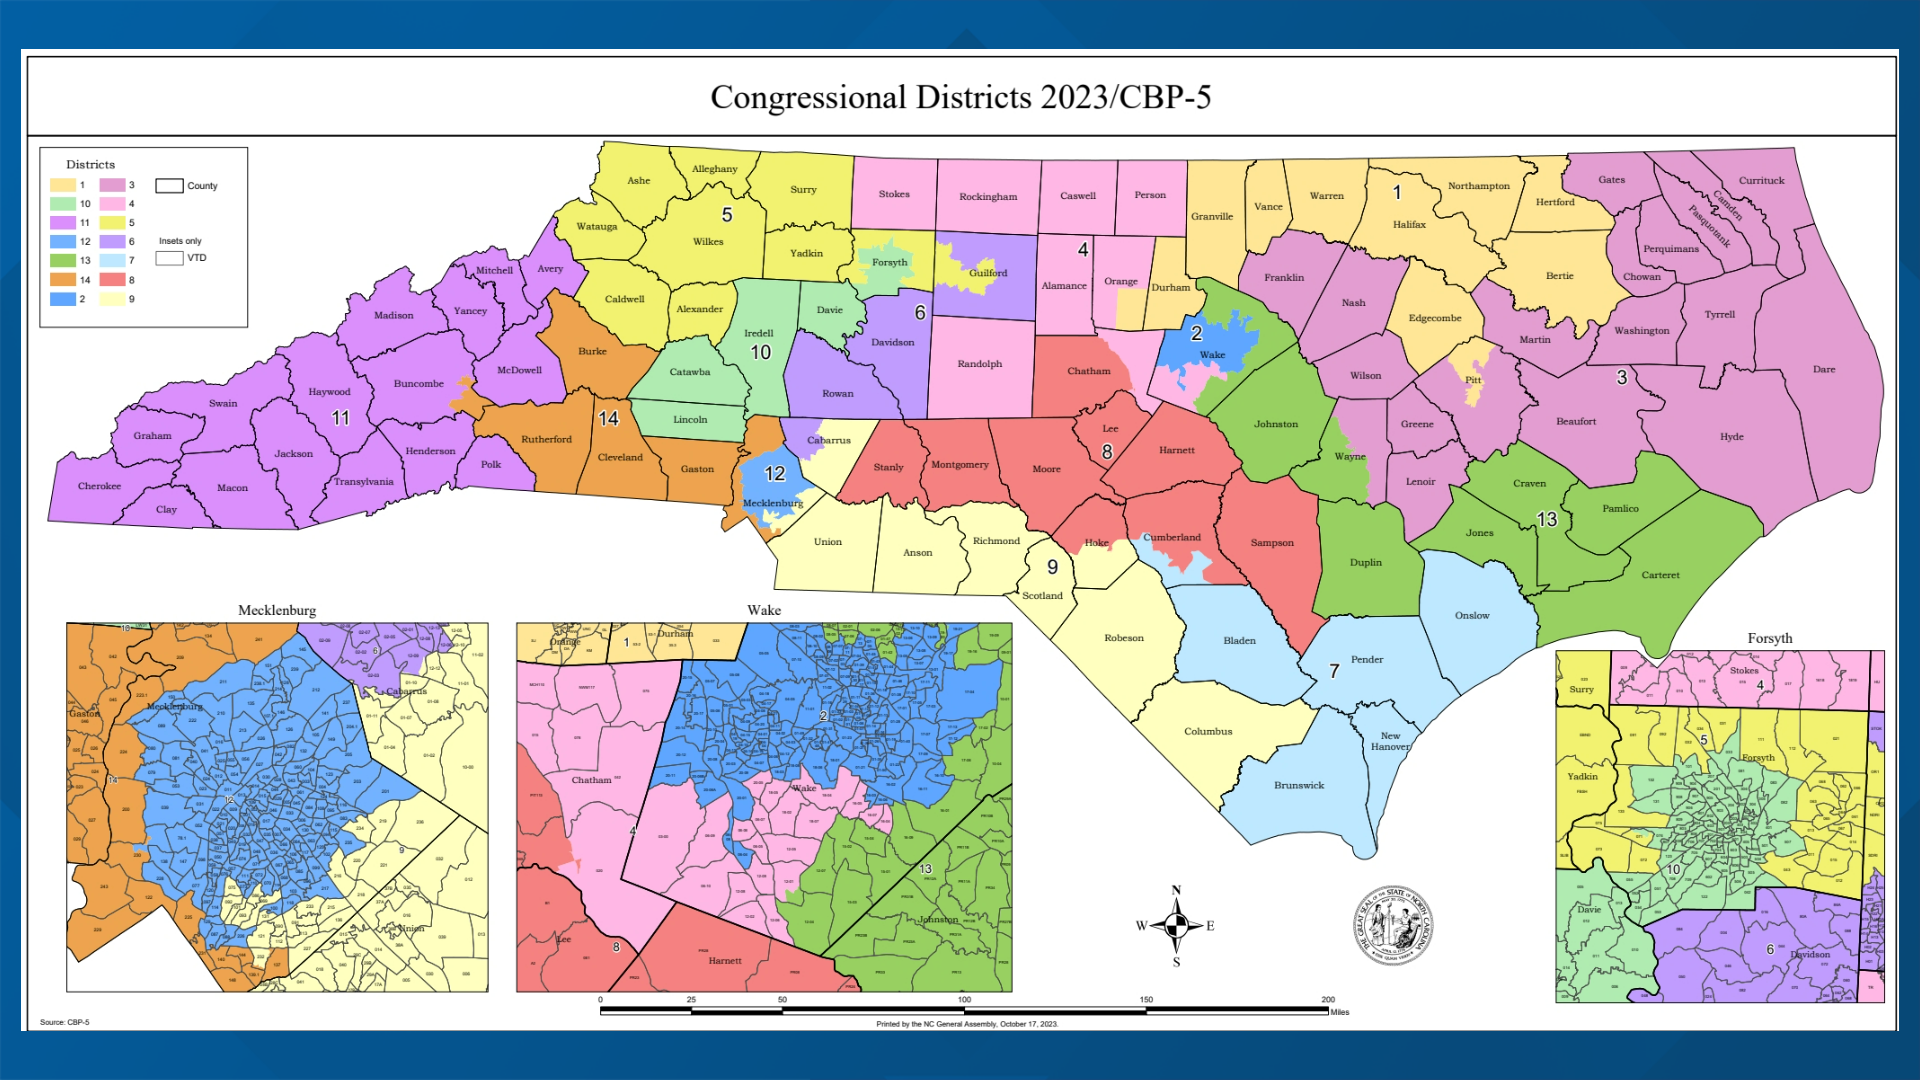 North Carolina Republicans Pitch New Congressional Maps 3014